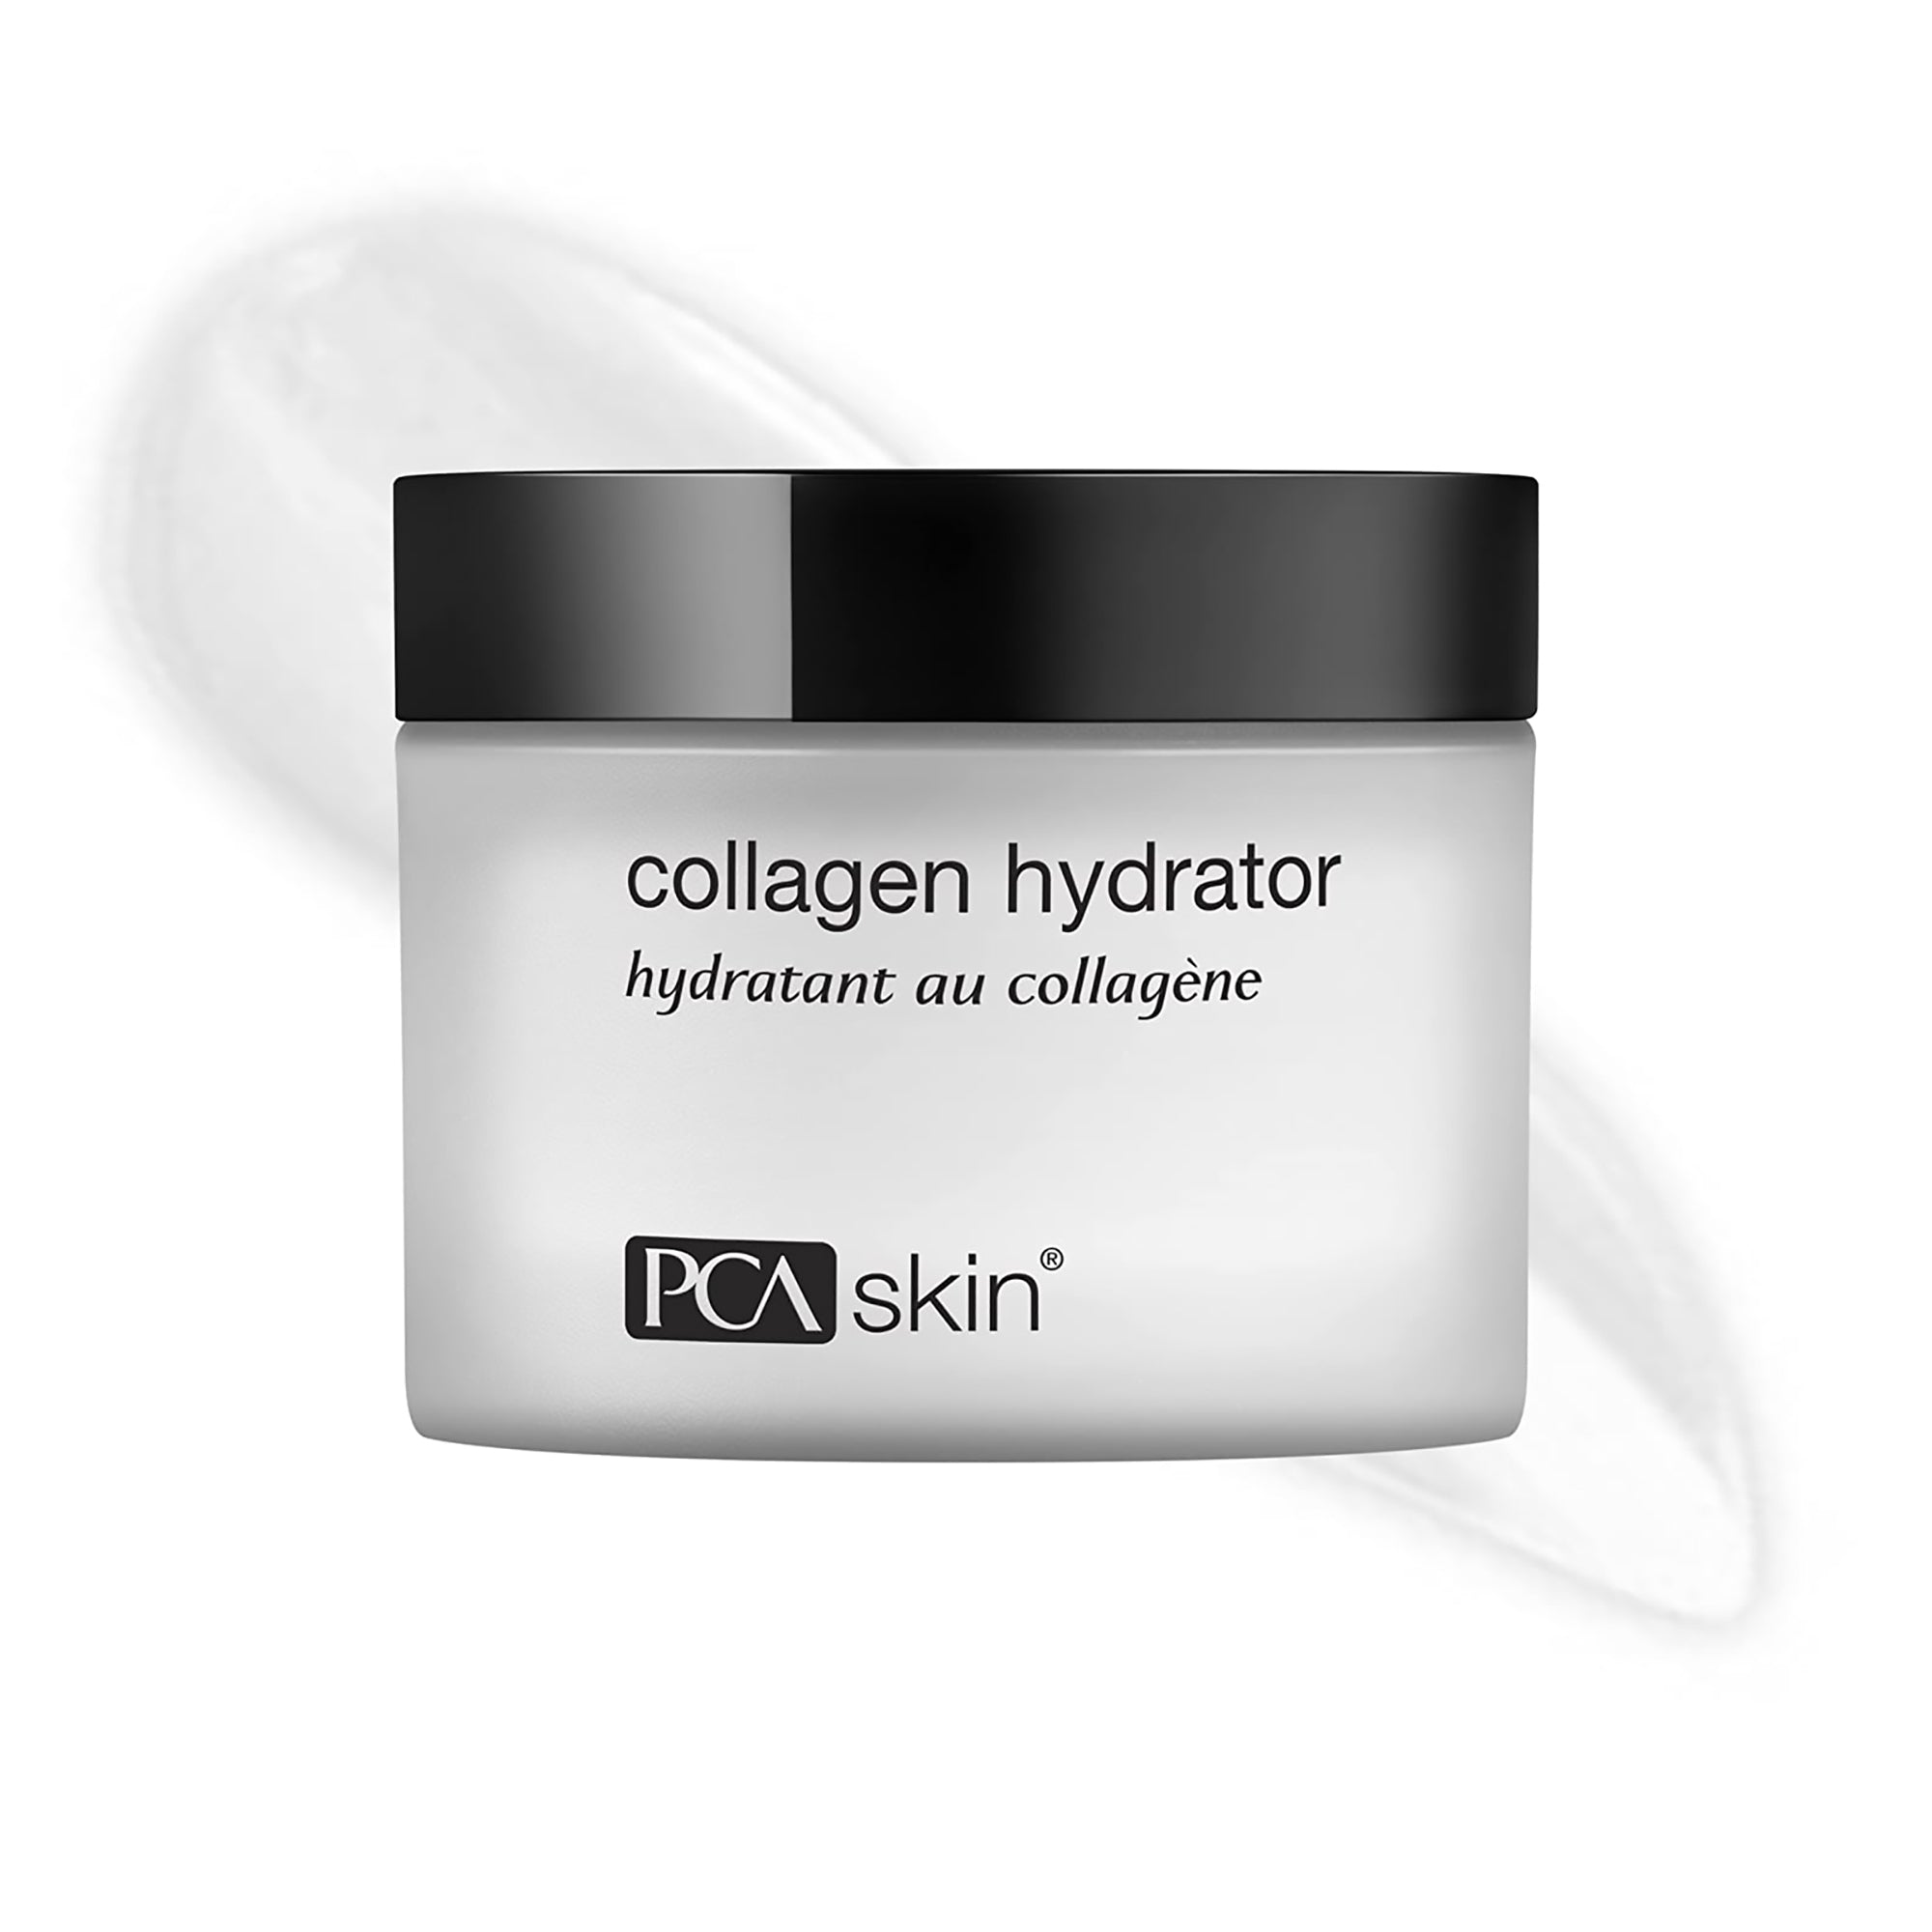 PCA SKIN Collagen Hydrator / 1.7OZ